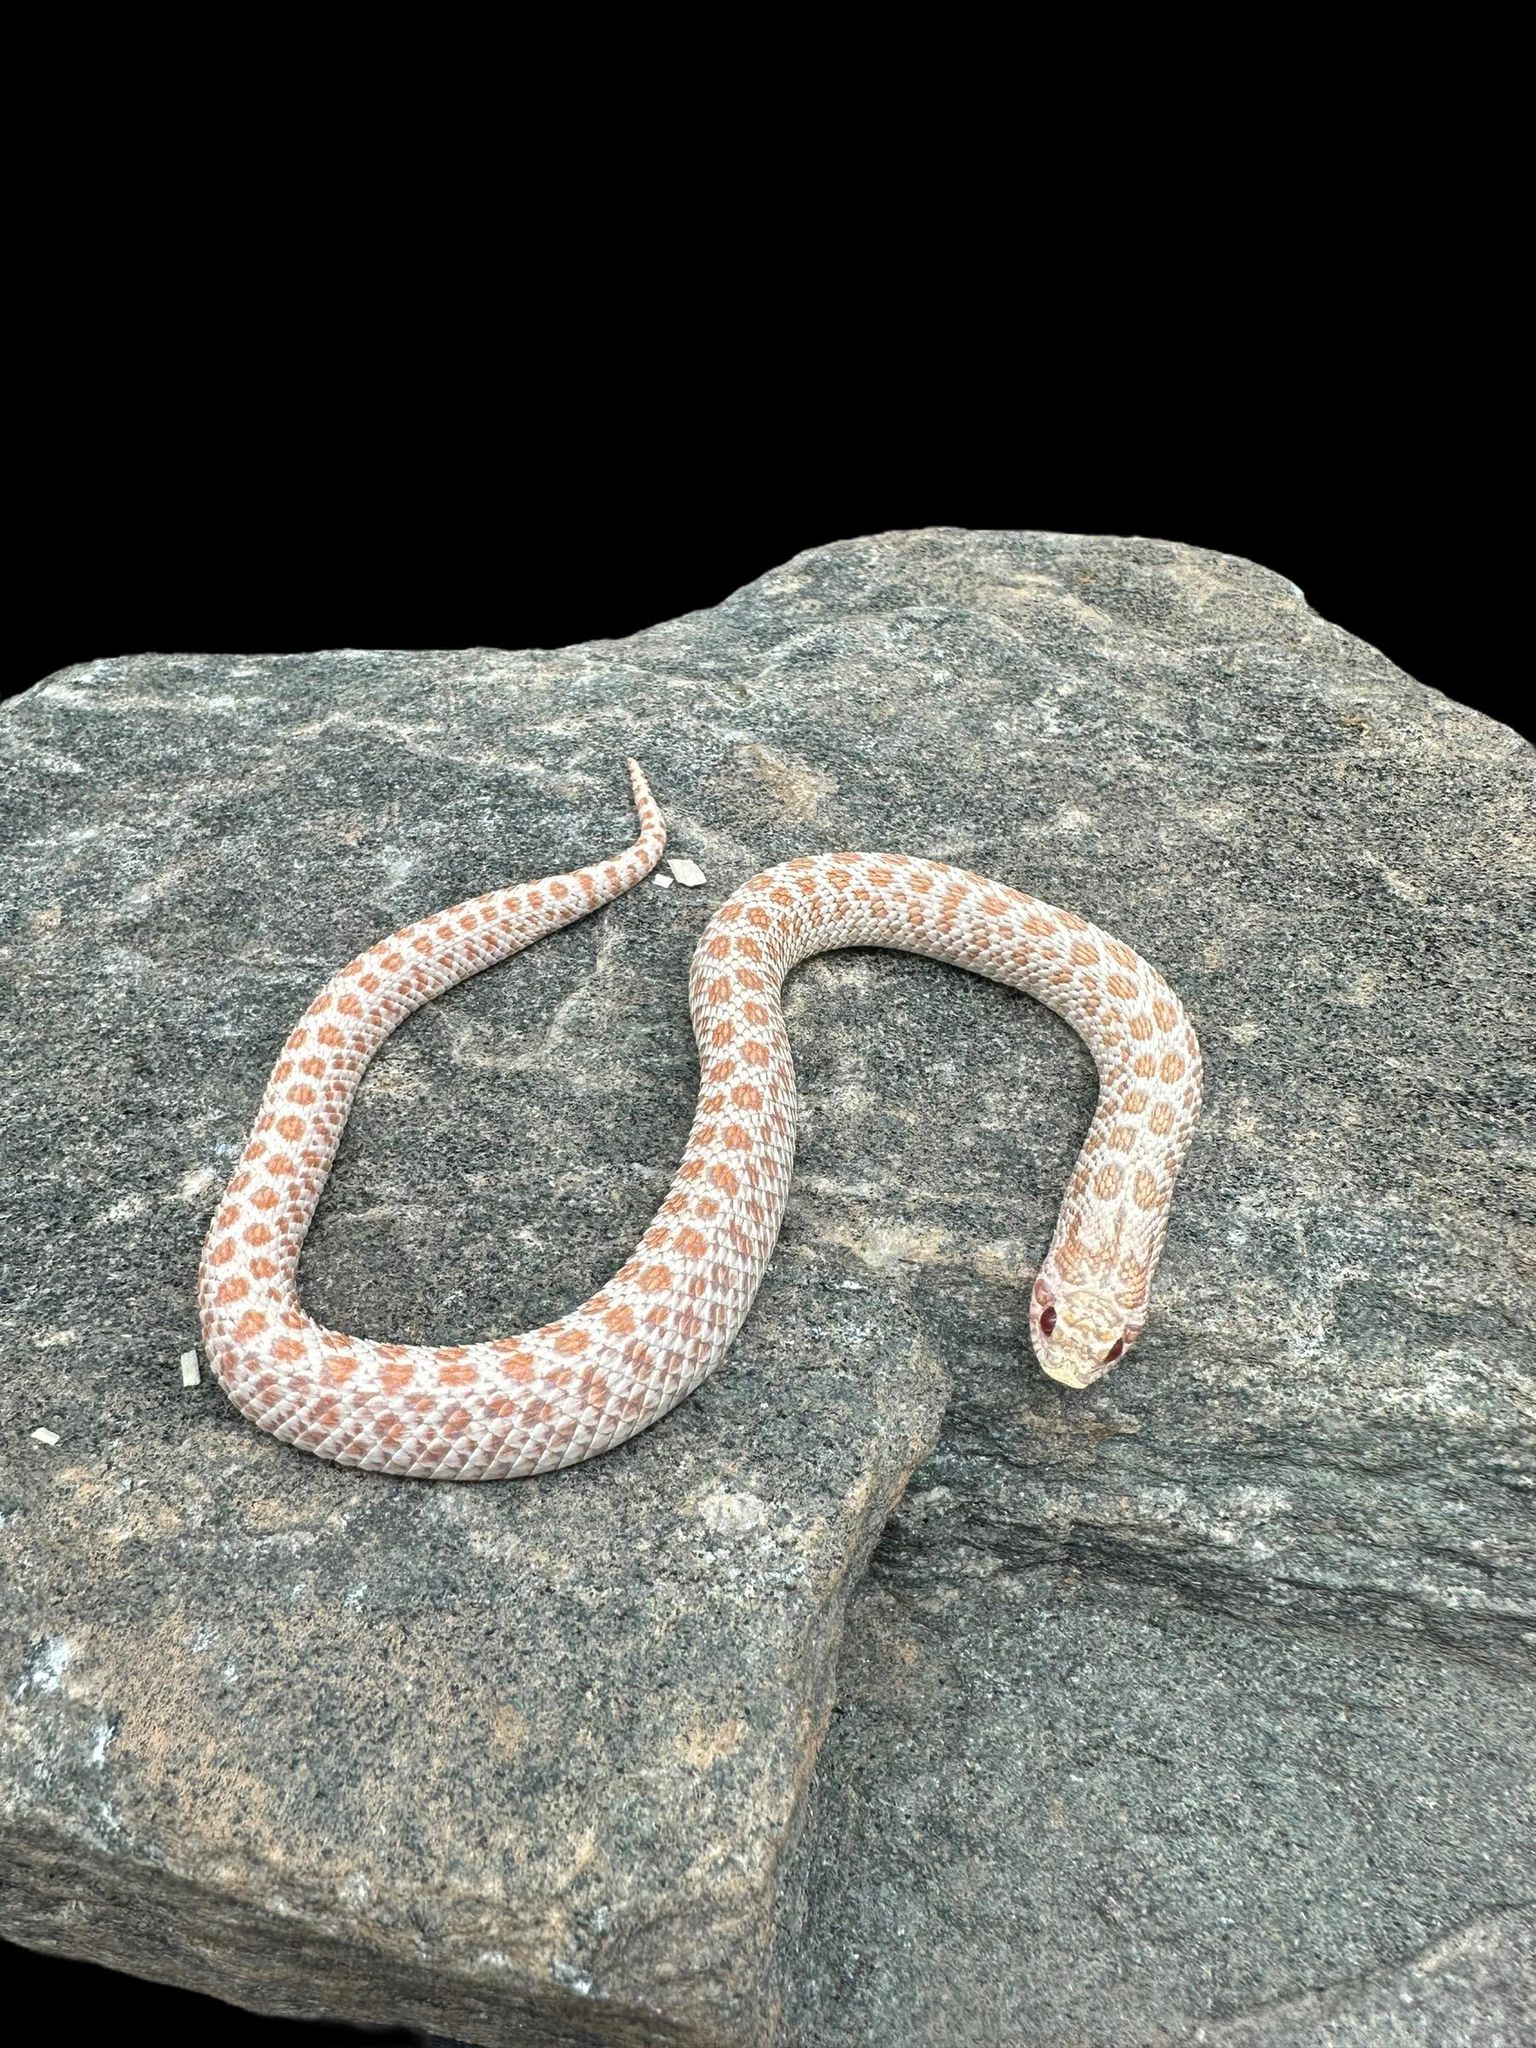 Western Hognose Snake (Albino Super Arctic) CBB